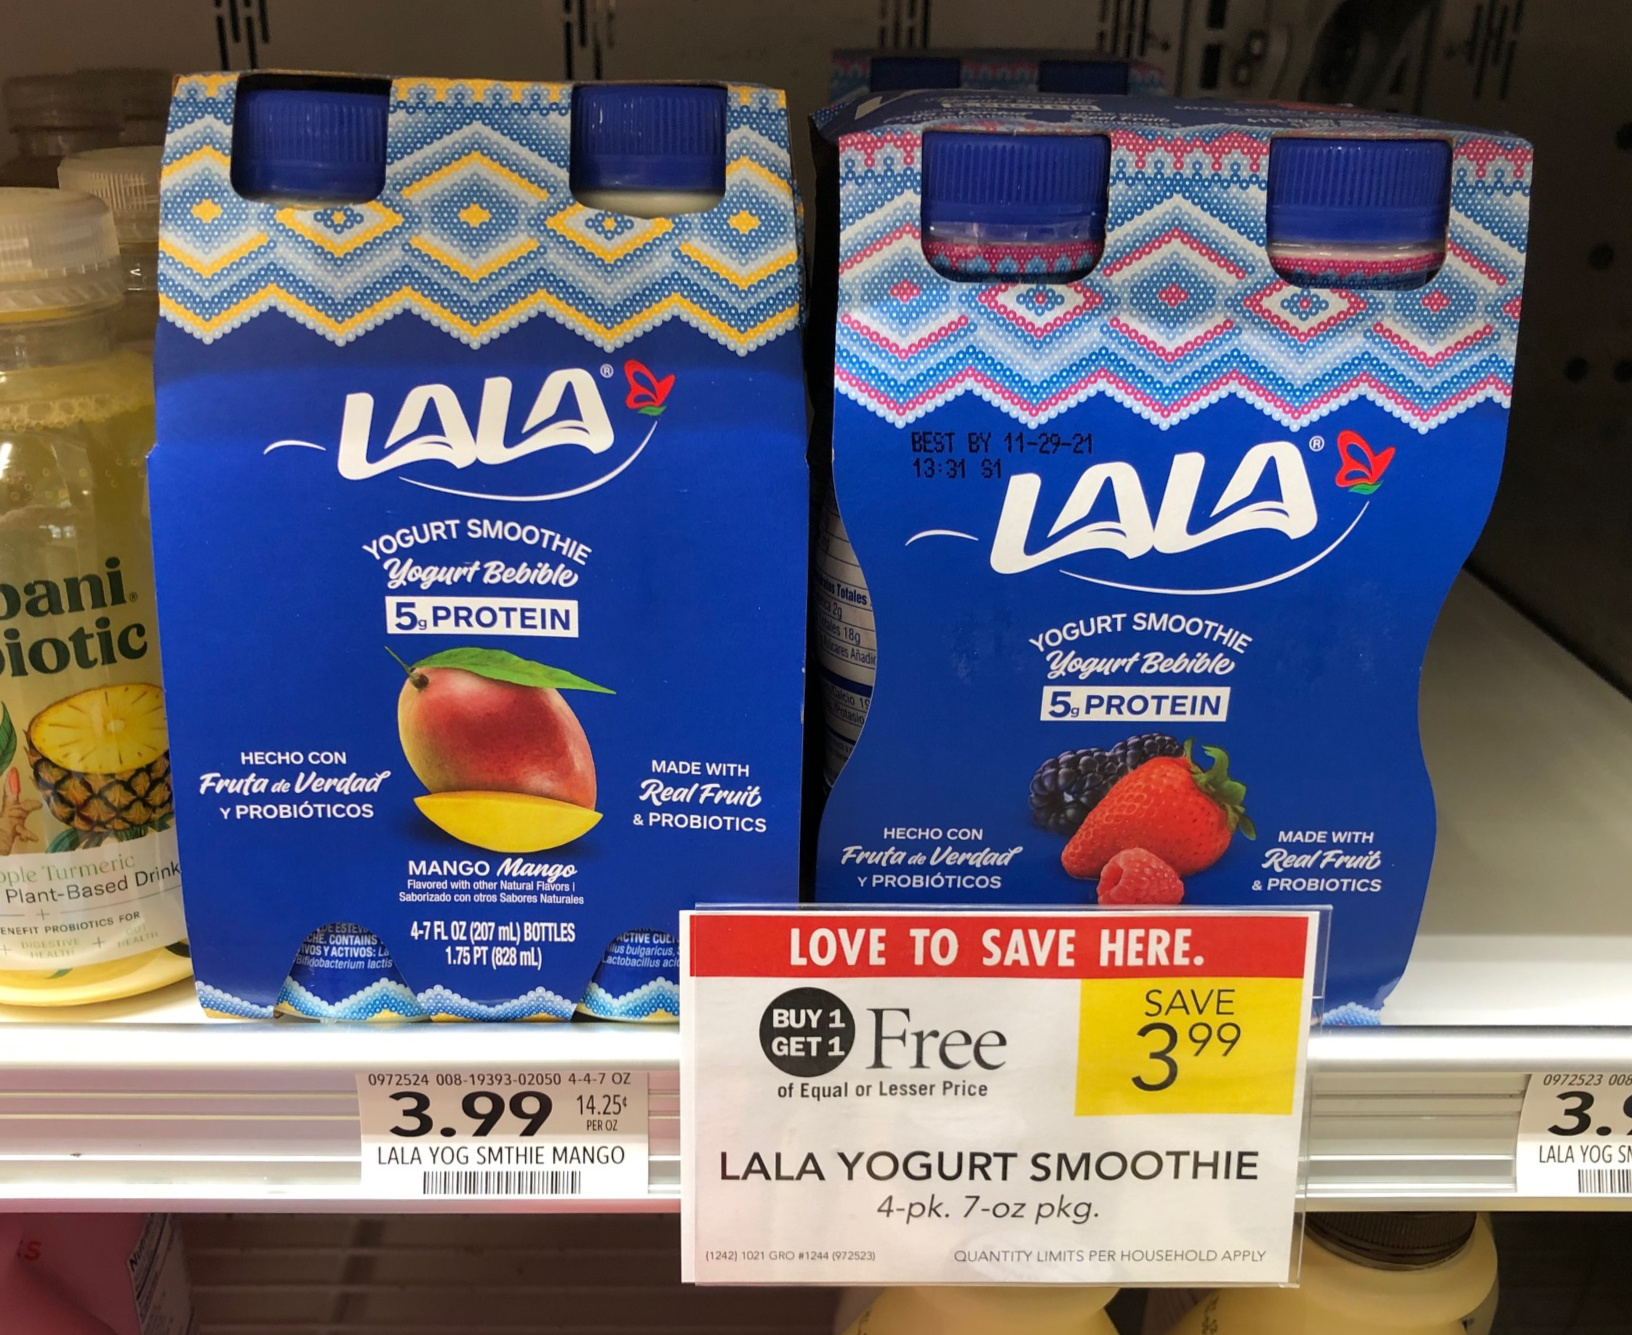 LALA Yogurt Smoothie 4-Pack As Low As 50¢ At Publix (13¢ Per Bottle) on I Heart Publix